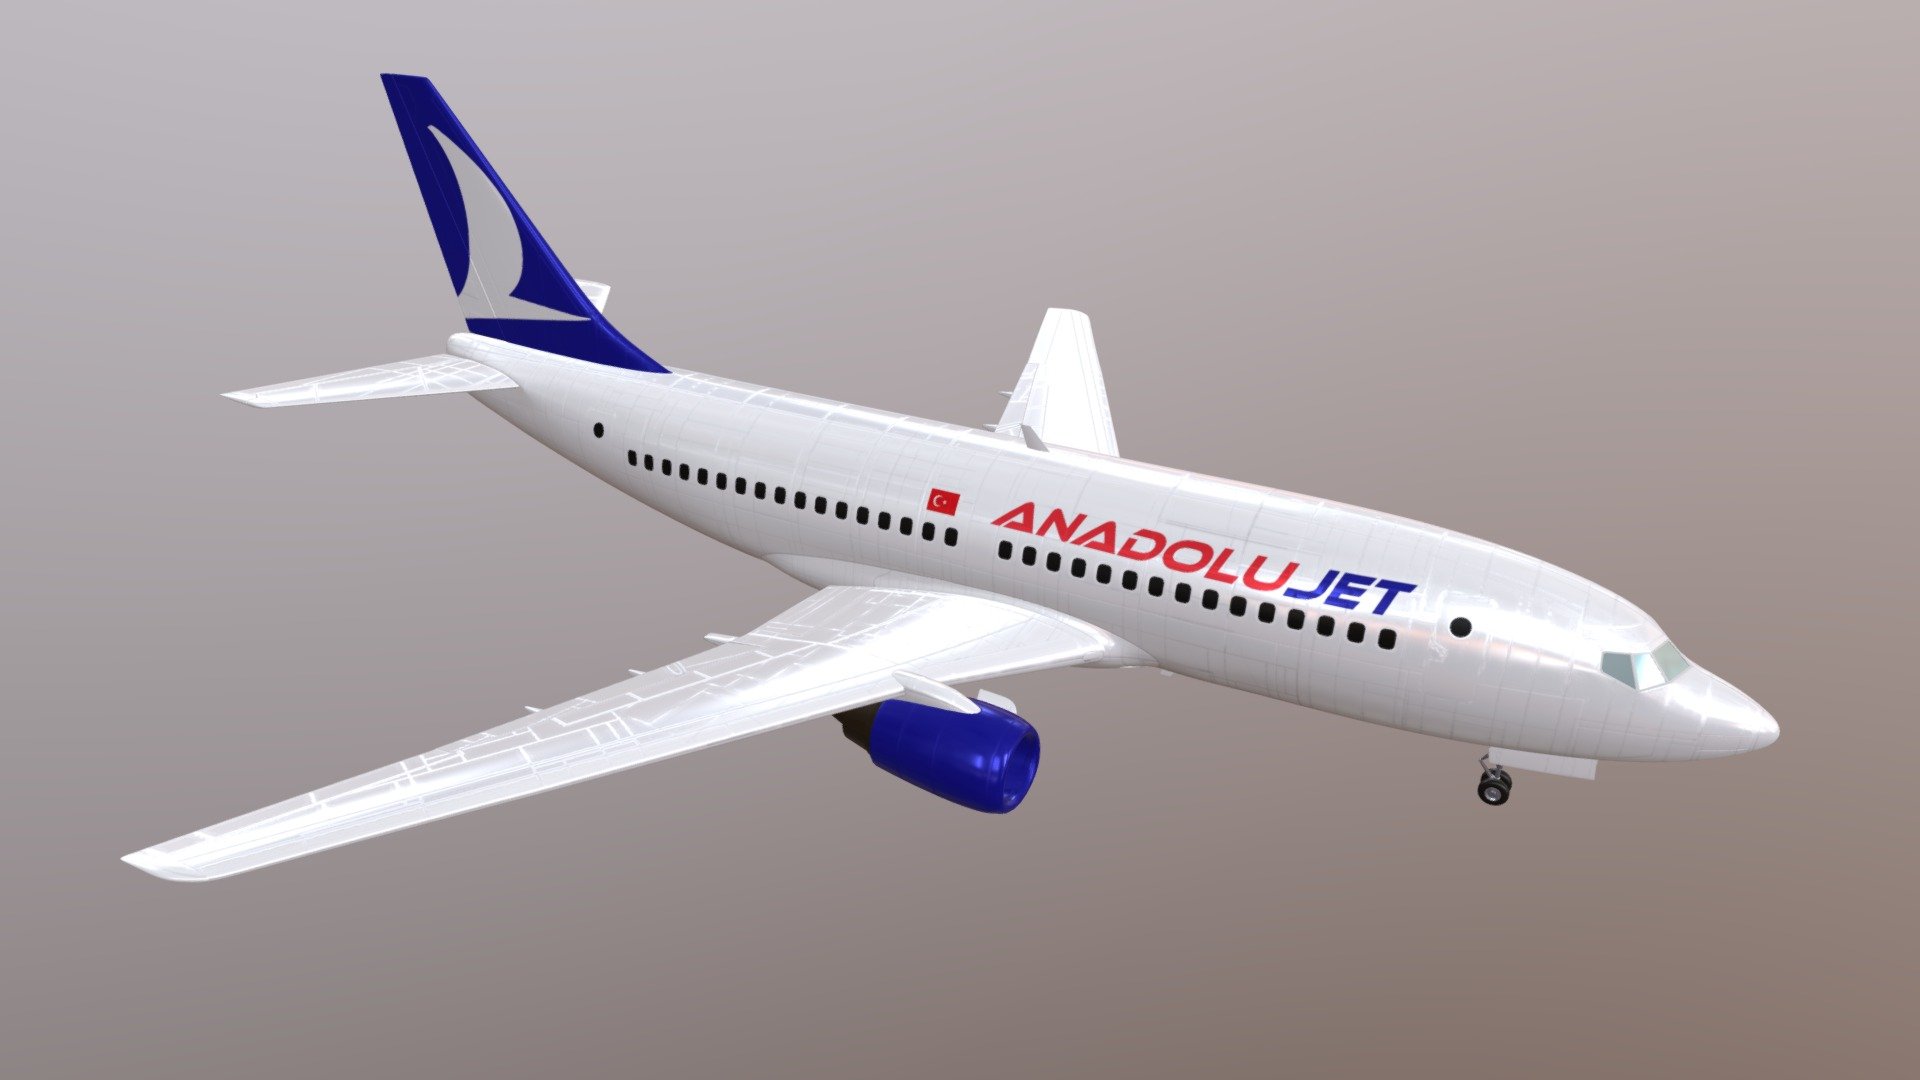 AnadoluJet Airlines boeing 737 - AnadoluJet - Download Free 3D model by Yusuf (@yusufes) 3d model